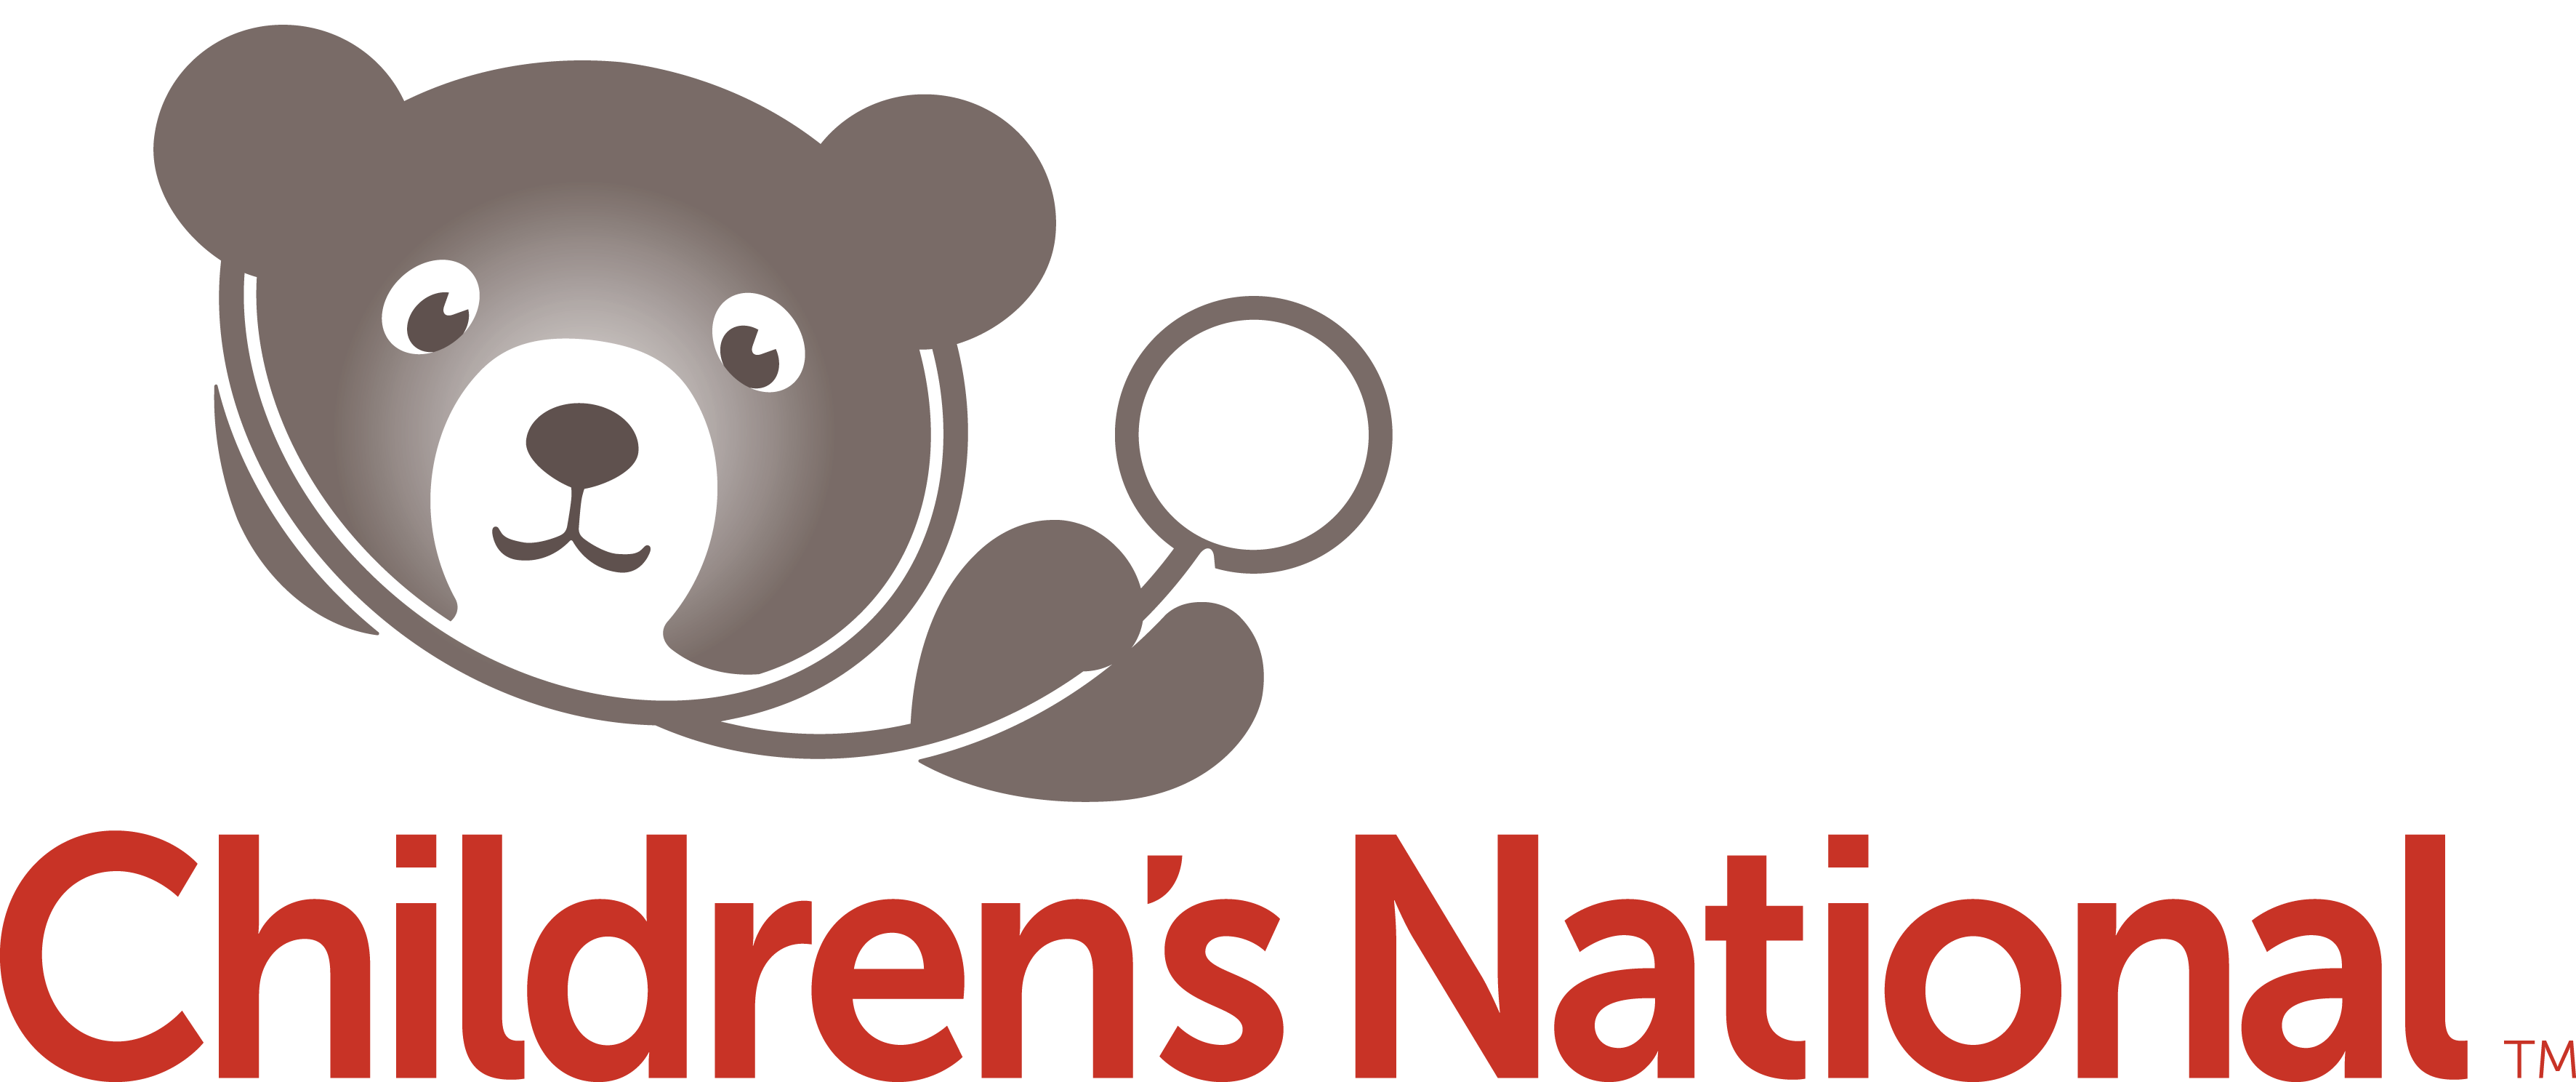 Children's National Horizontal Logo - Childrens National (3544x1488)